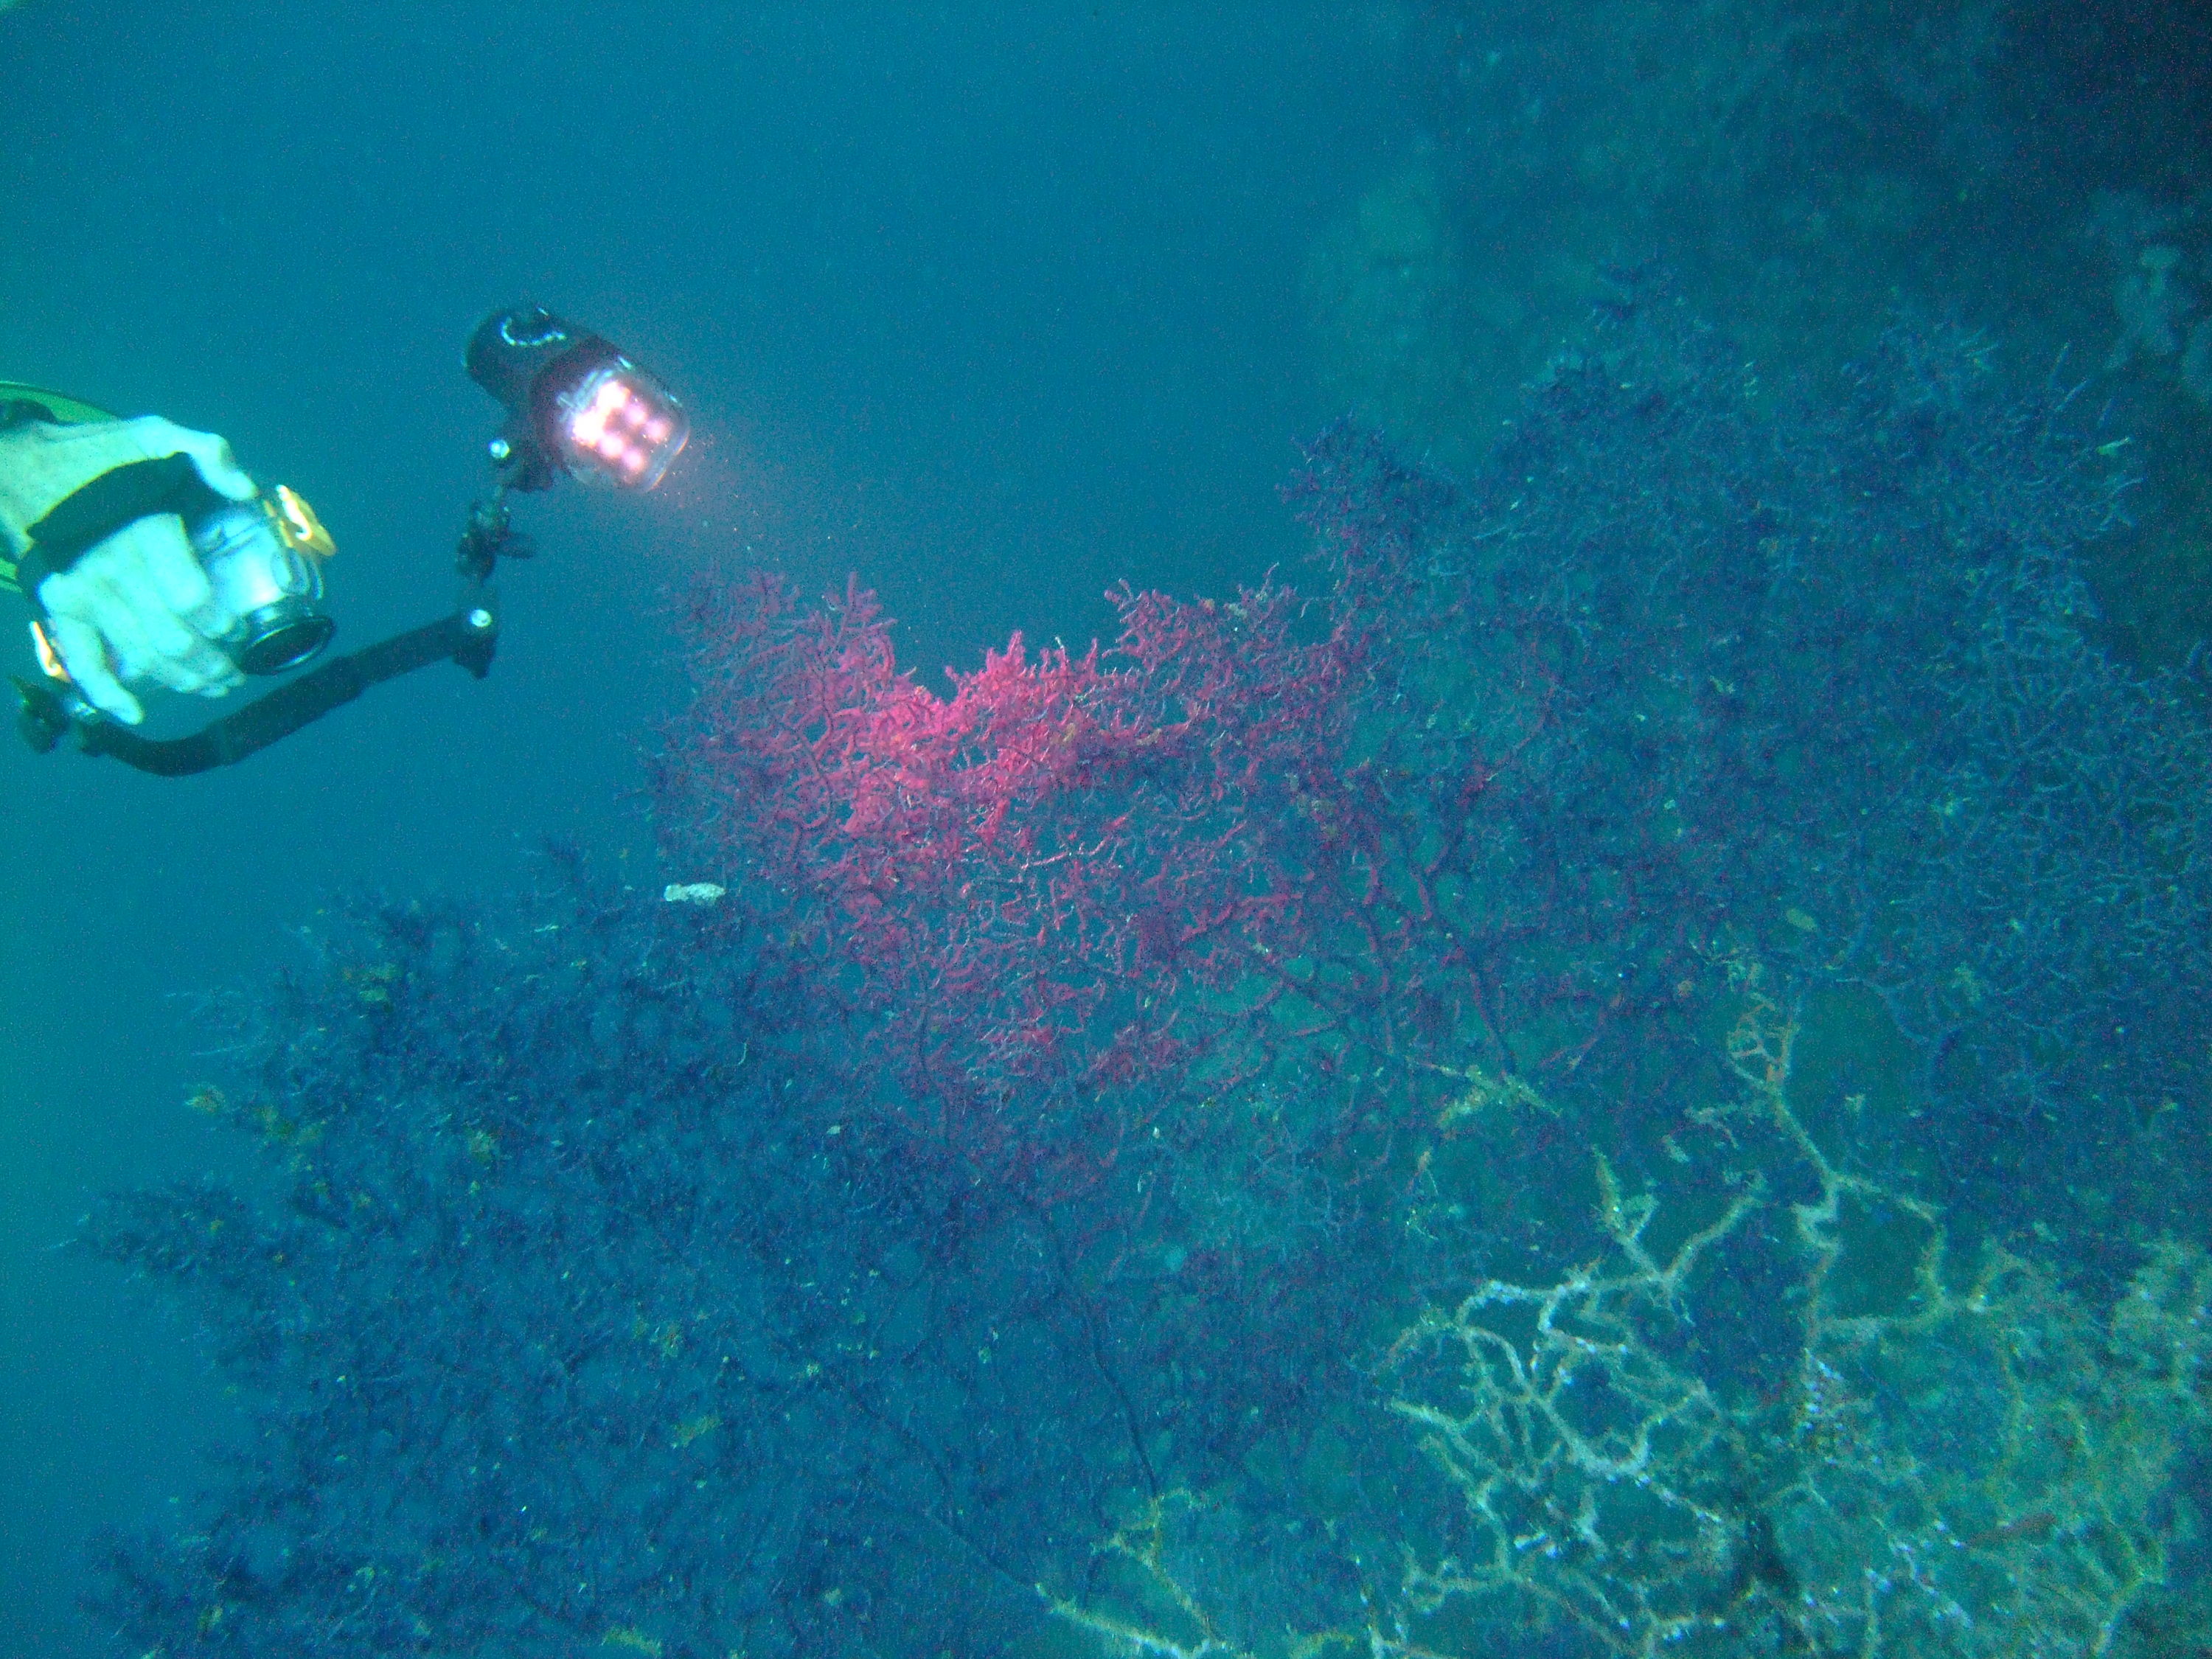 Camera with Underwater Video Light